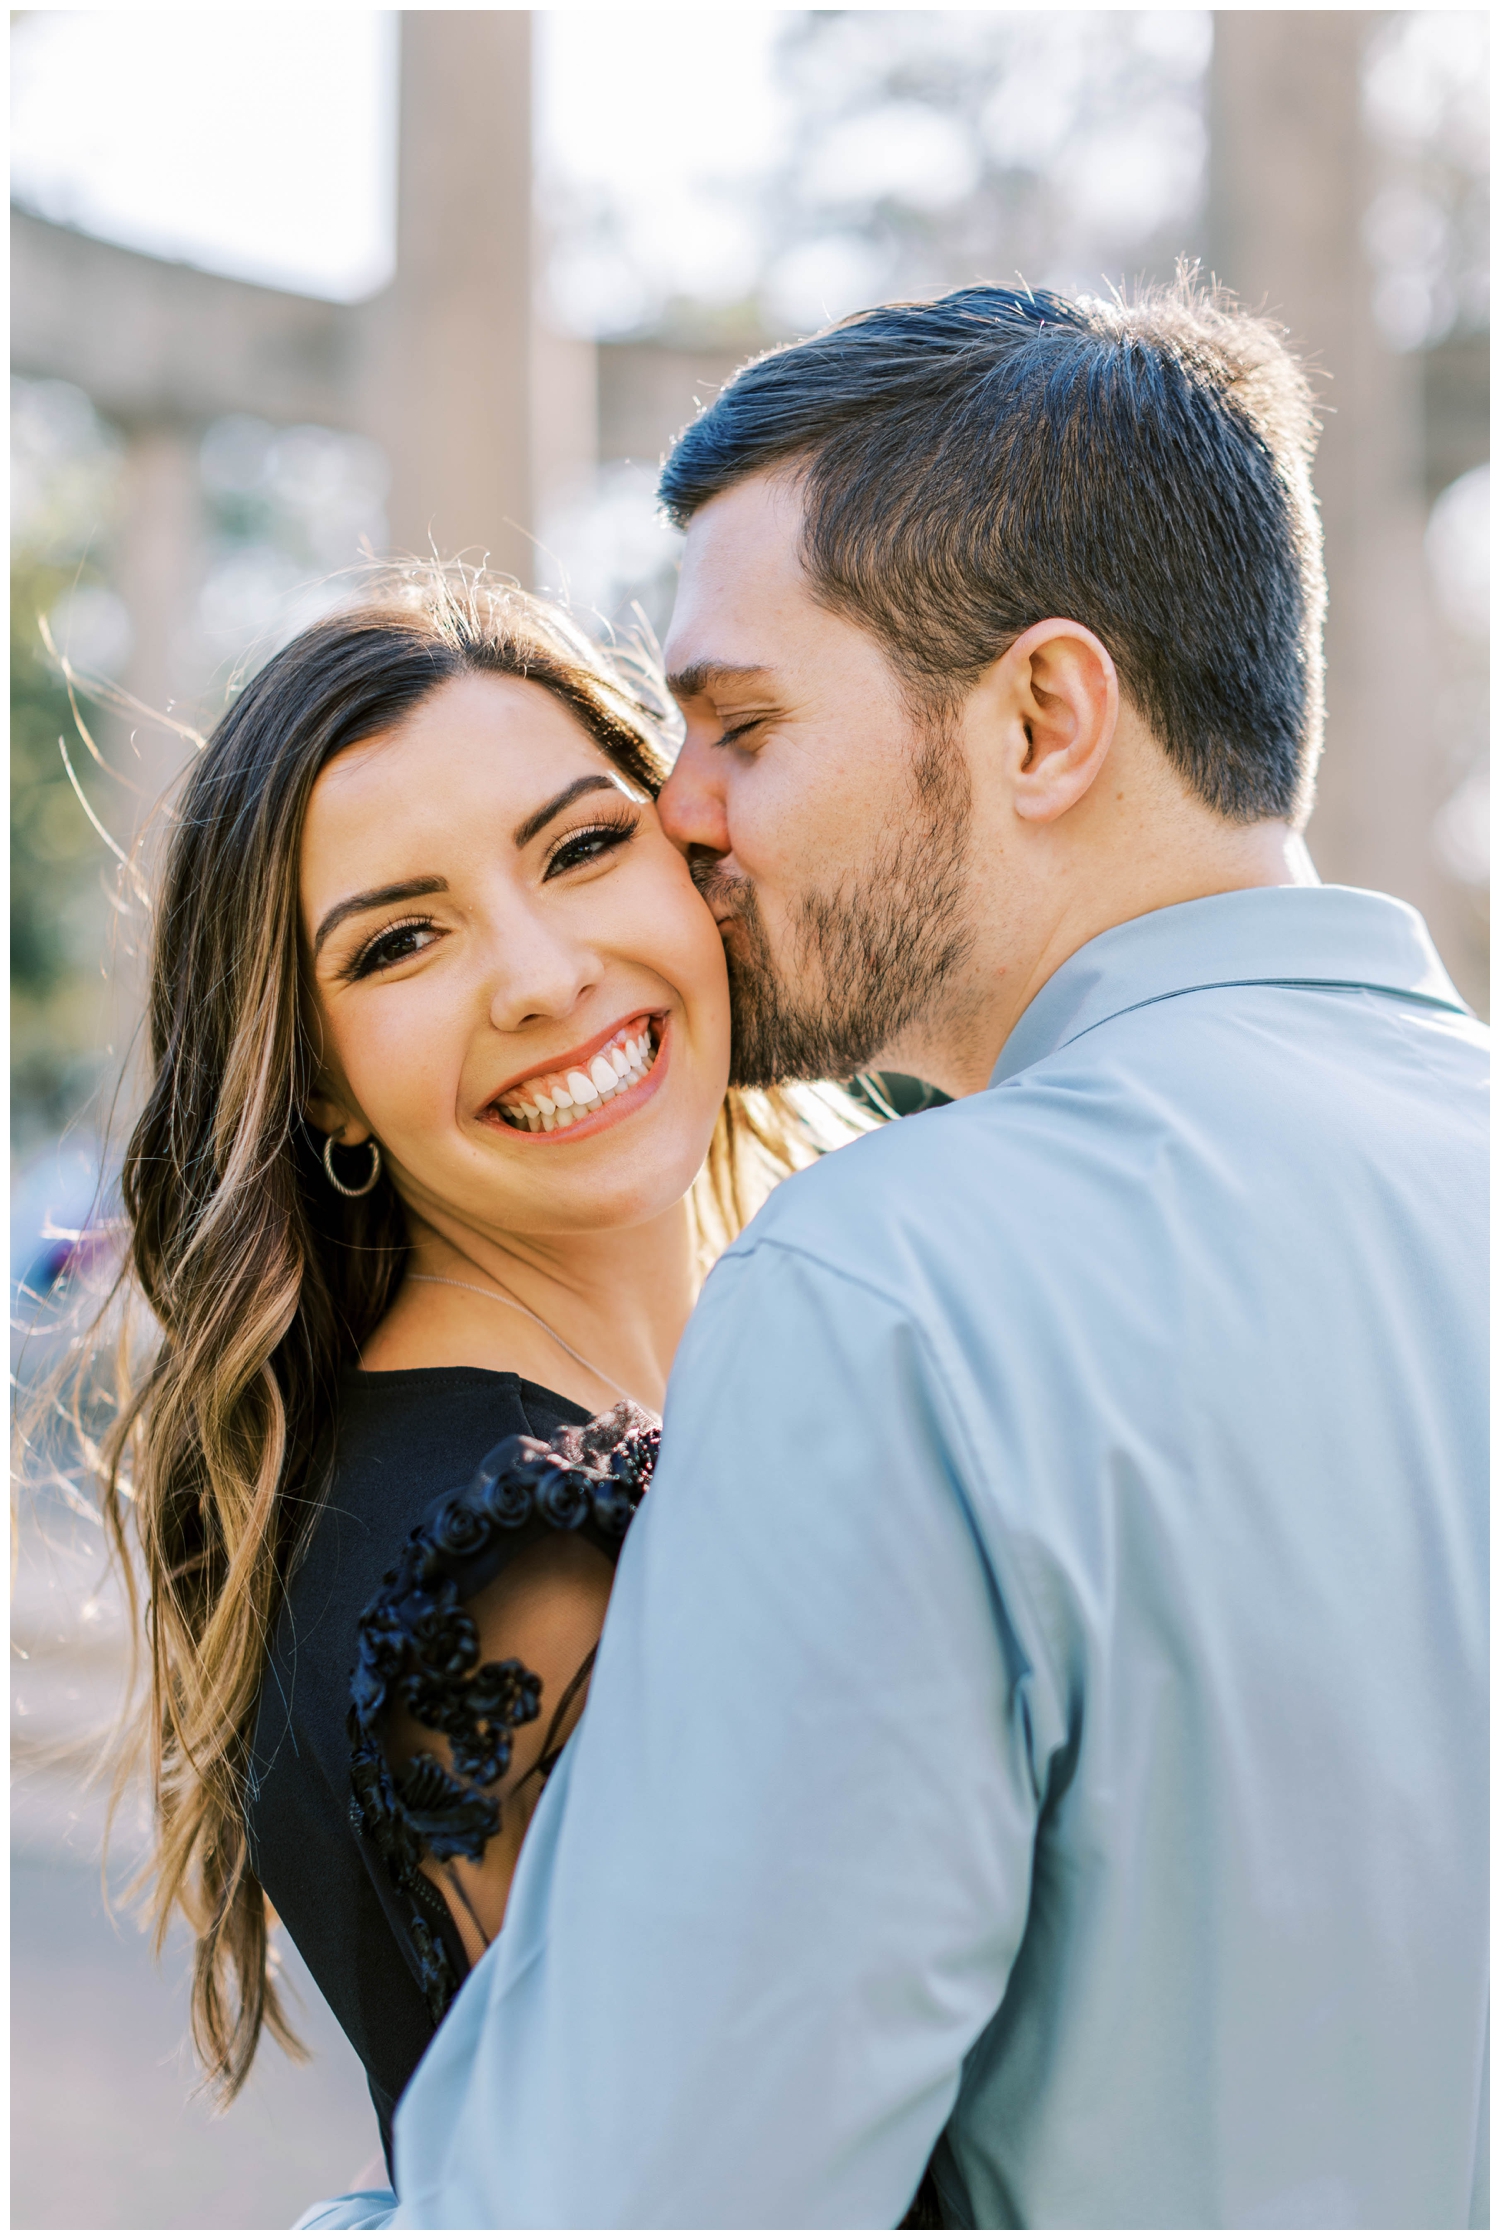 Galveston Wedding Photographer portrait session engaged couple kissing and smiling